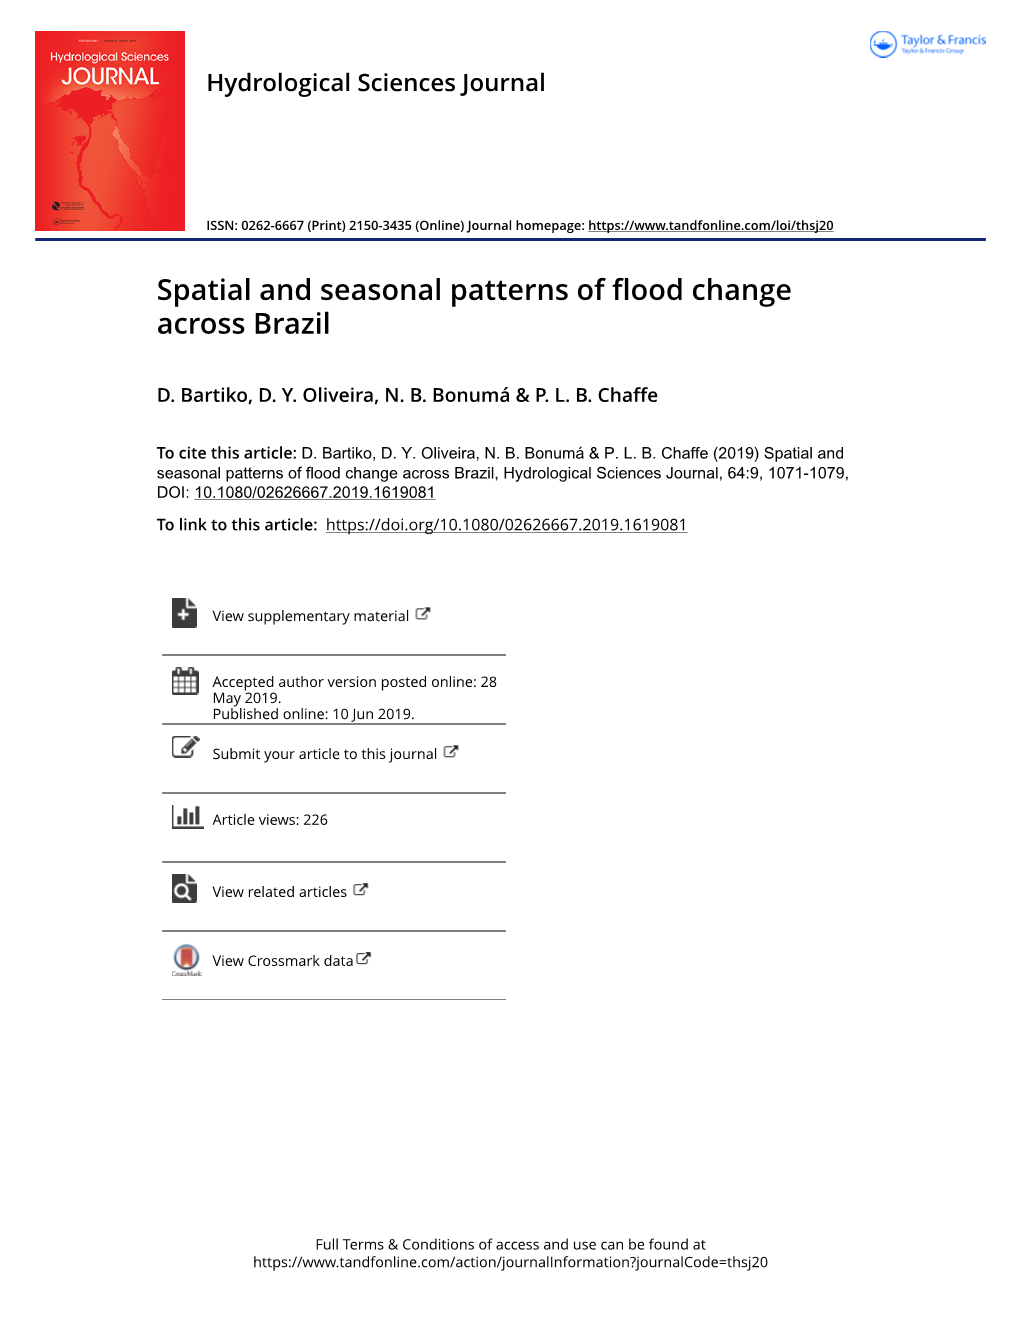 Spatial and Seasonal Patterns of Flood Change Across Brazil